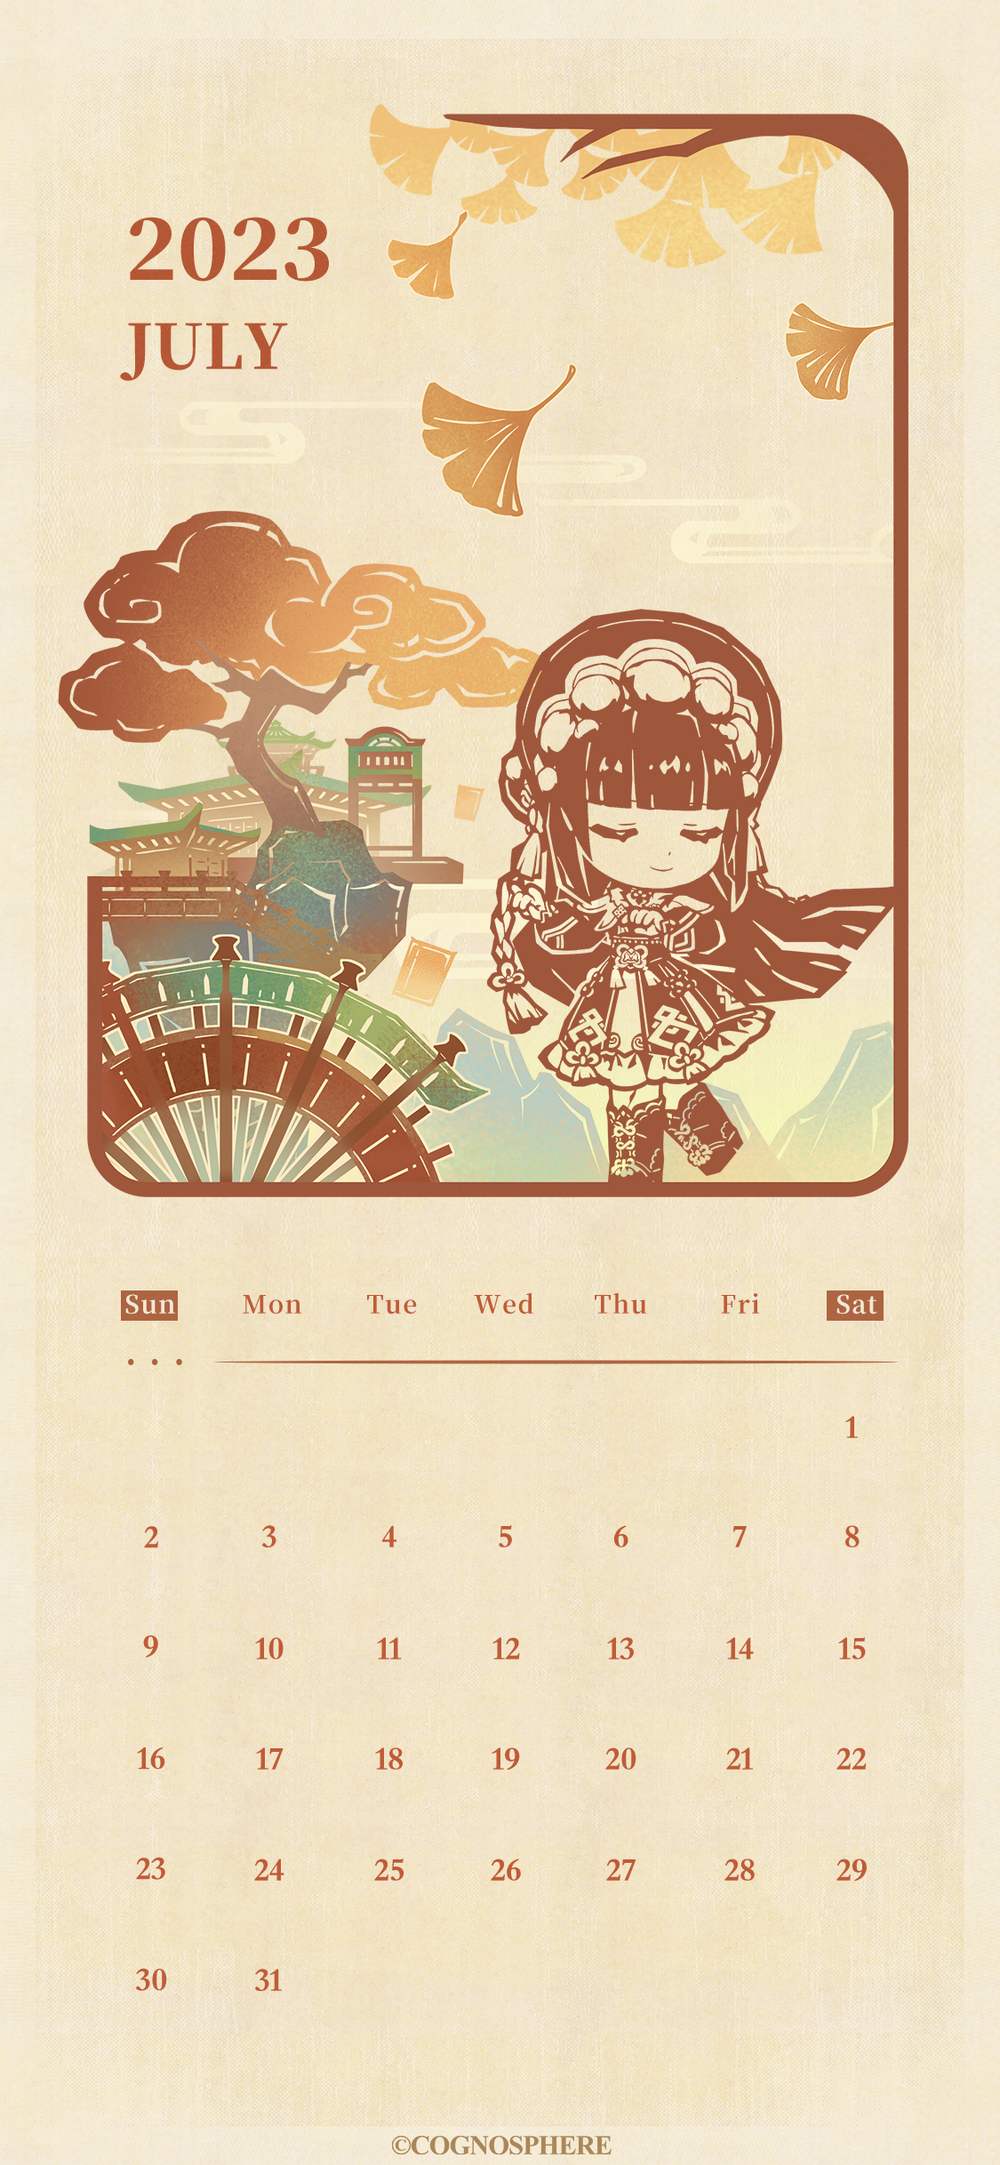 Genshin Impact Lantern Rite 2023 Calendar and Wallpapers Shared